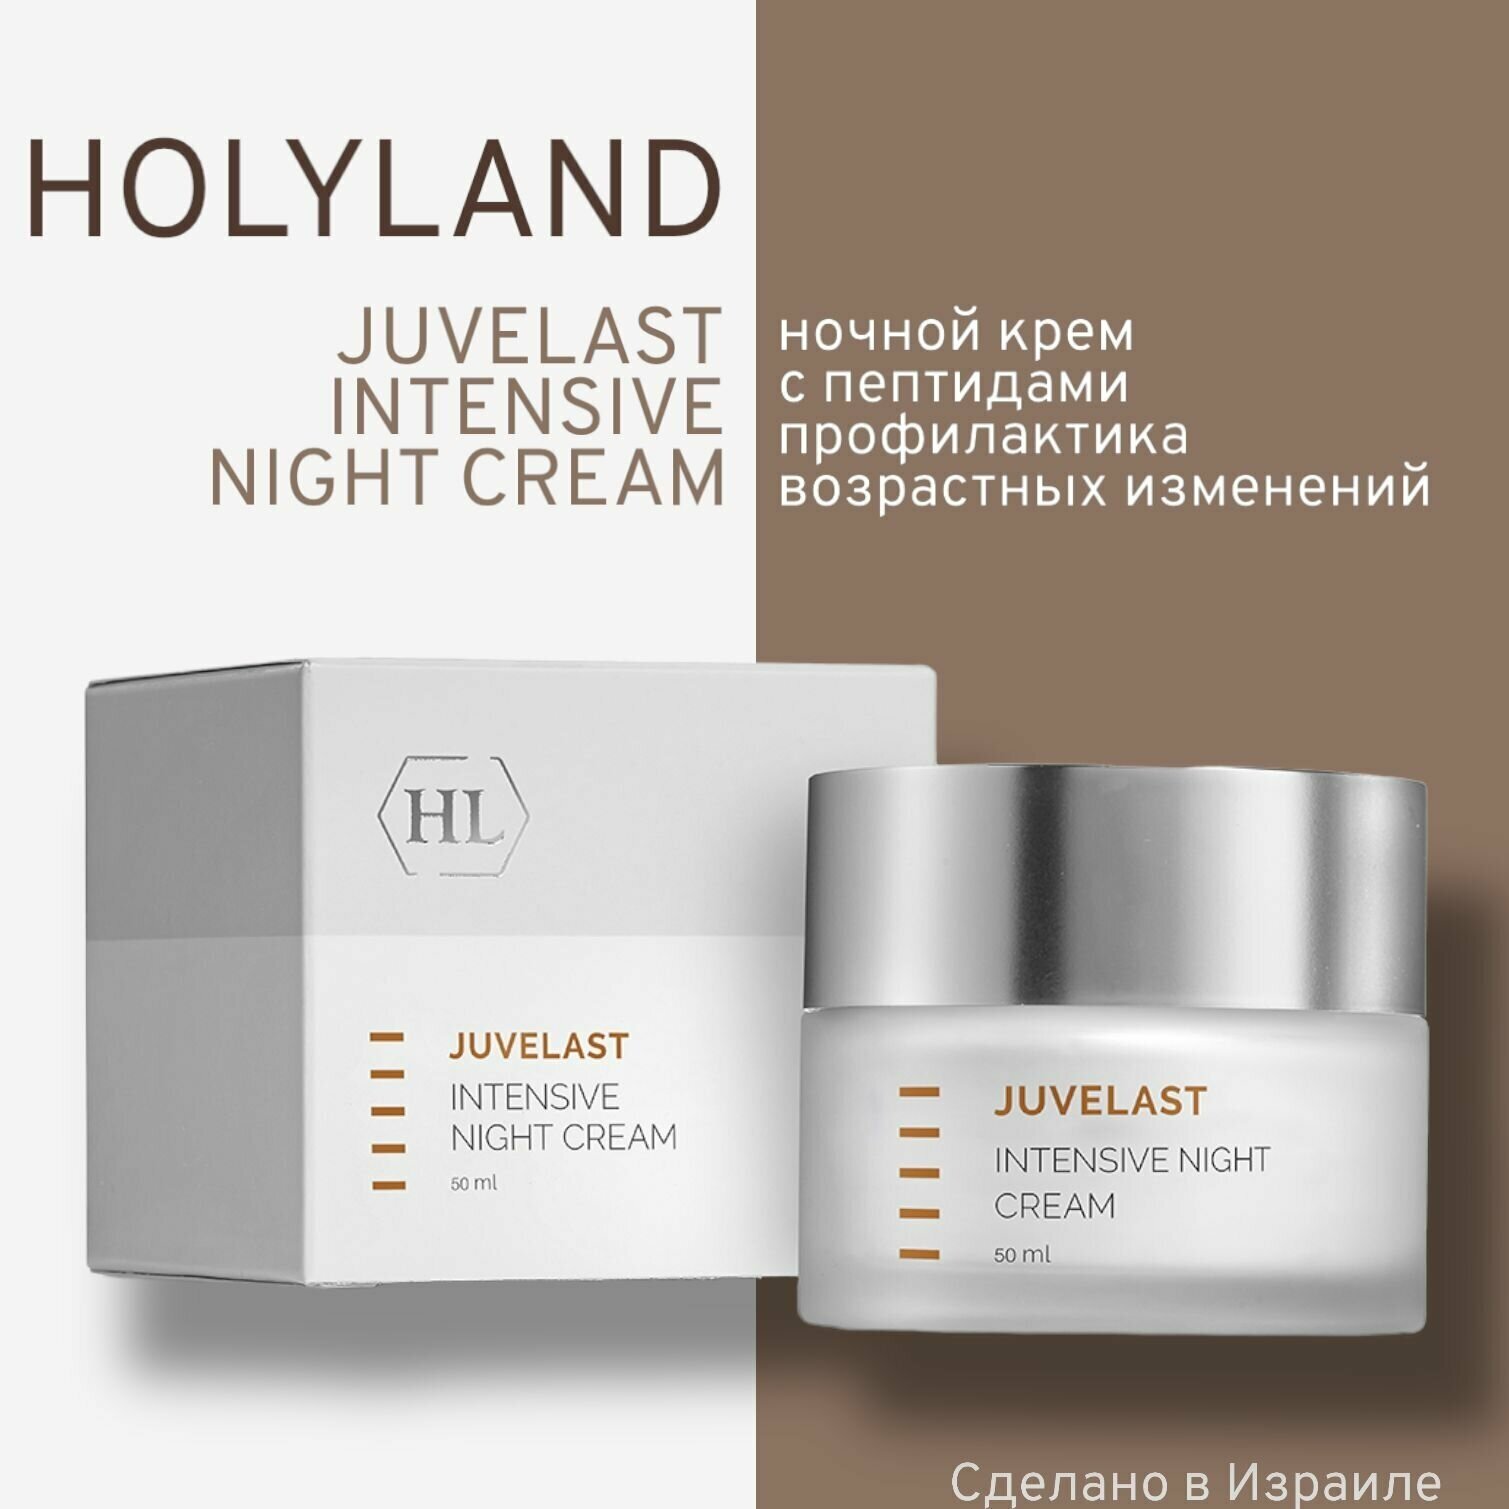 Holy land JUVELAST Intensive Night Cream 50 ml (Ночной крем 50 мл)